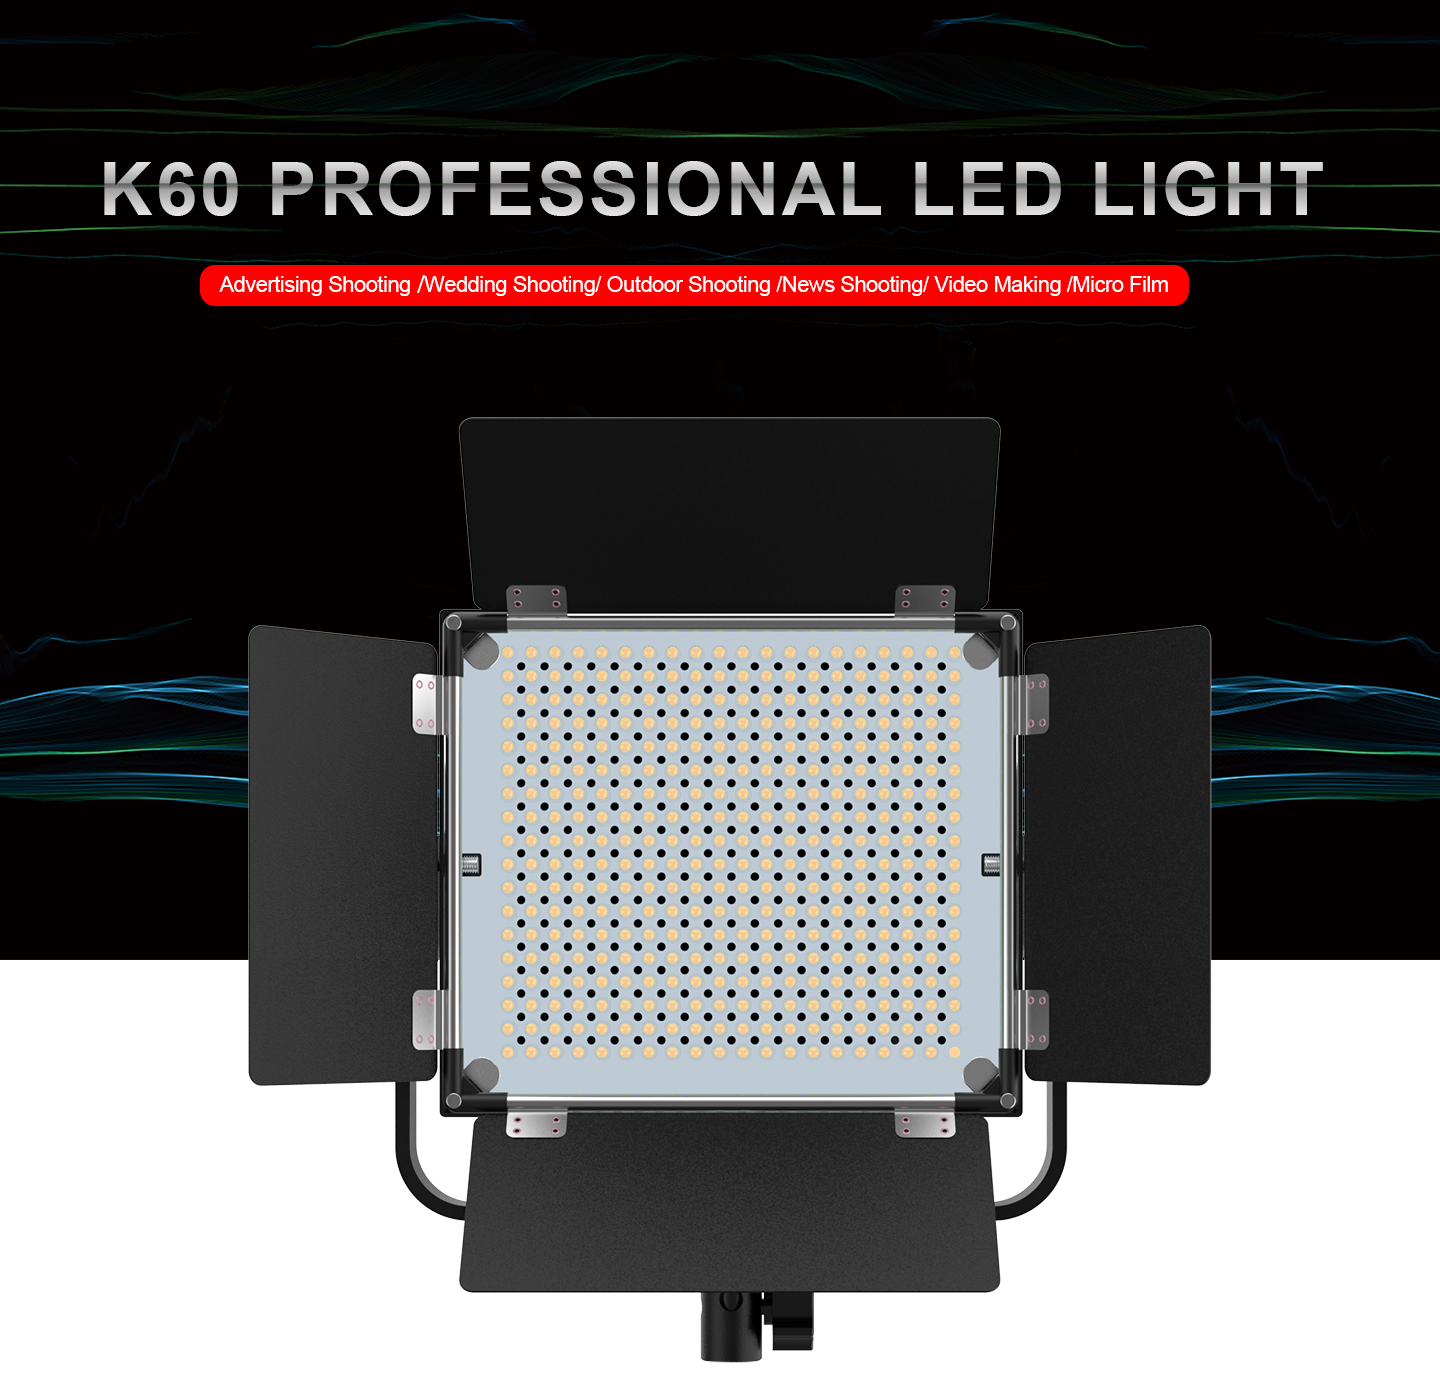 K60 PROFESSIONAL LED LIGHT